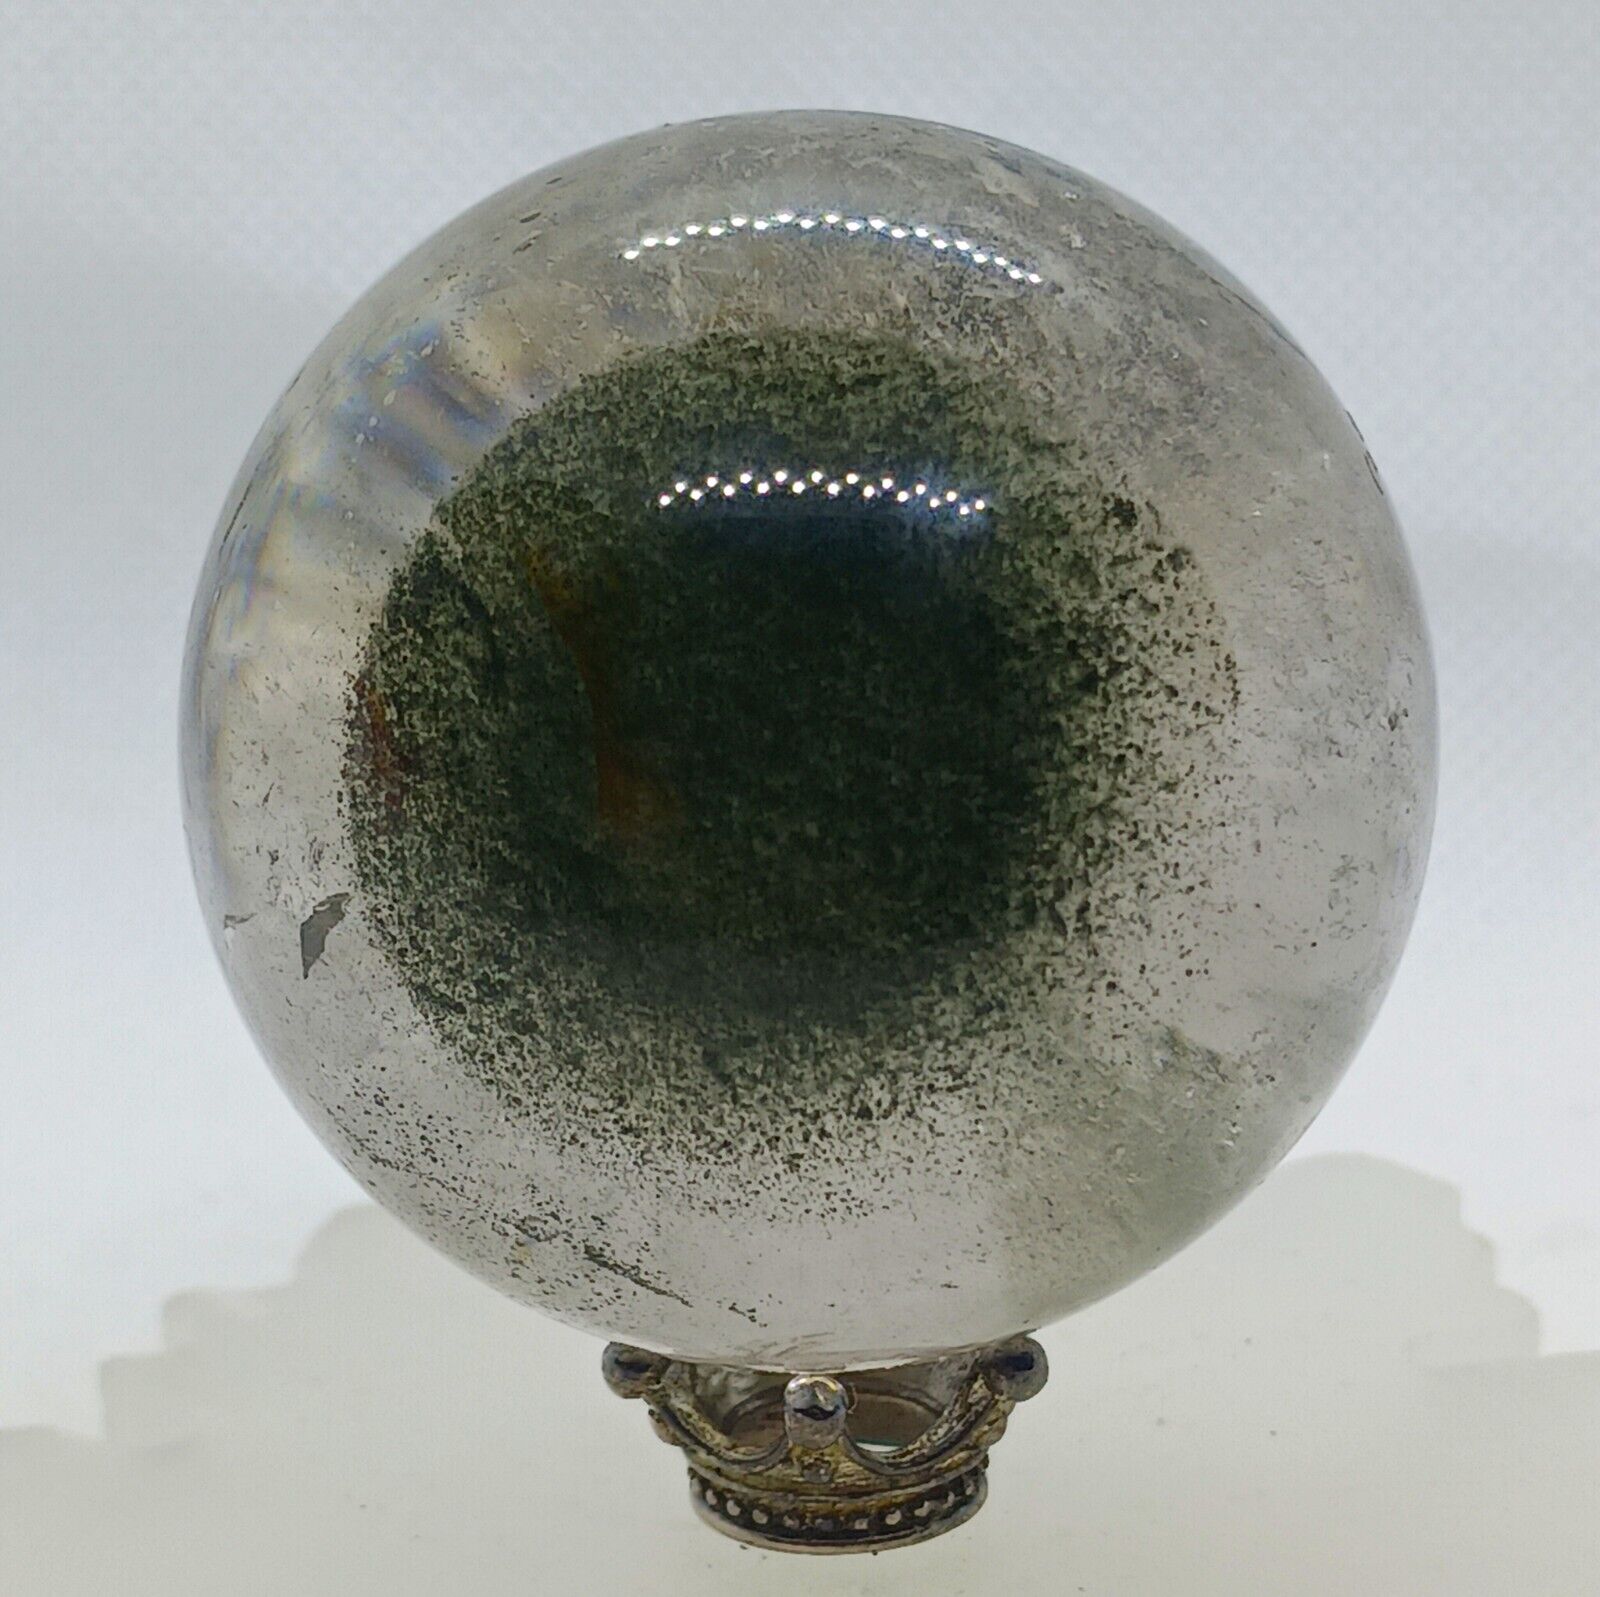 Garden Quartz Crystal Sphere Polished Lodolite Stone Clear Quartz With Inclusion